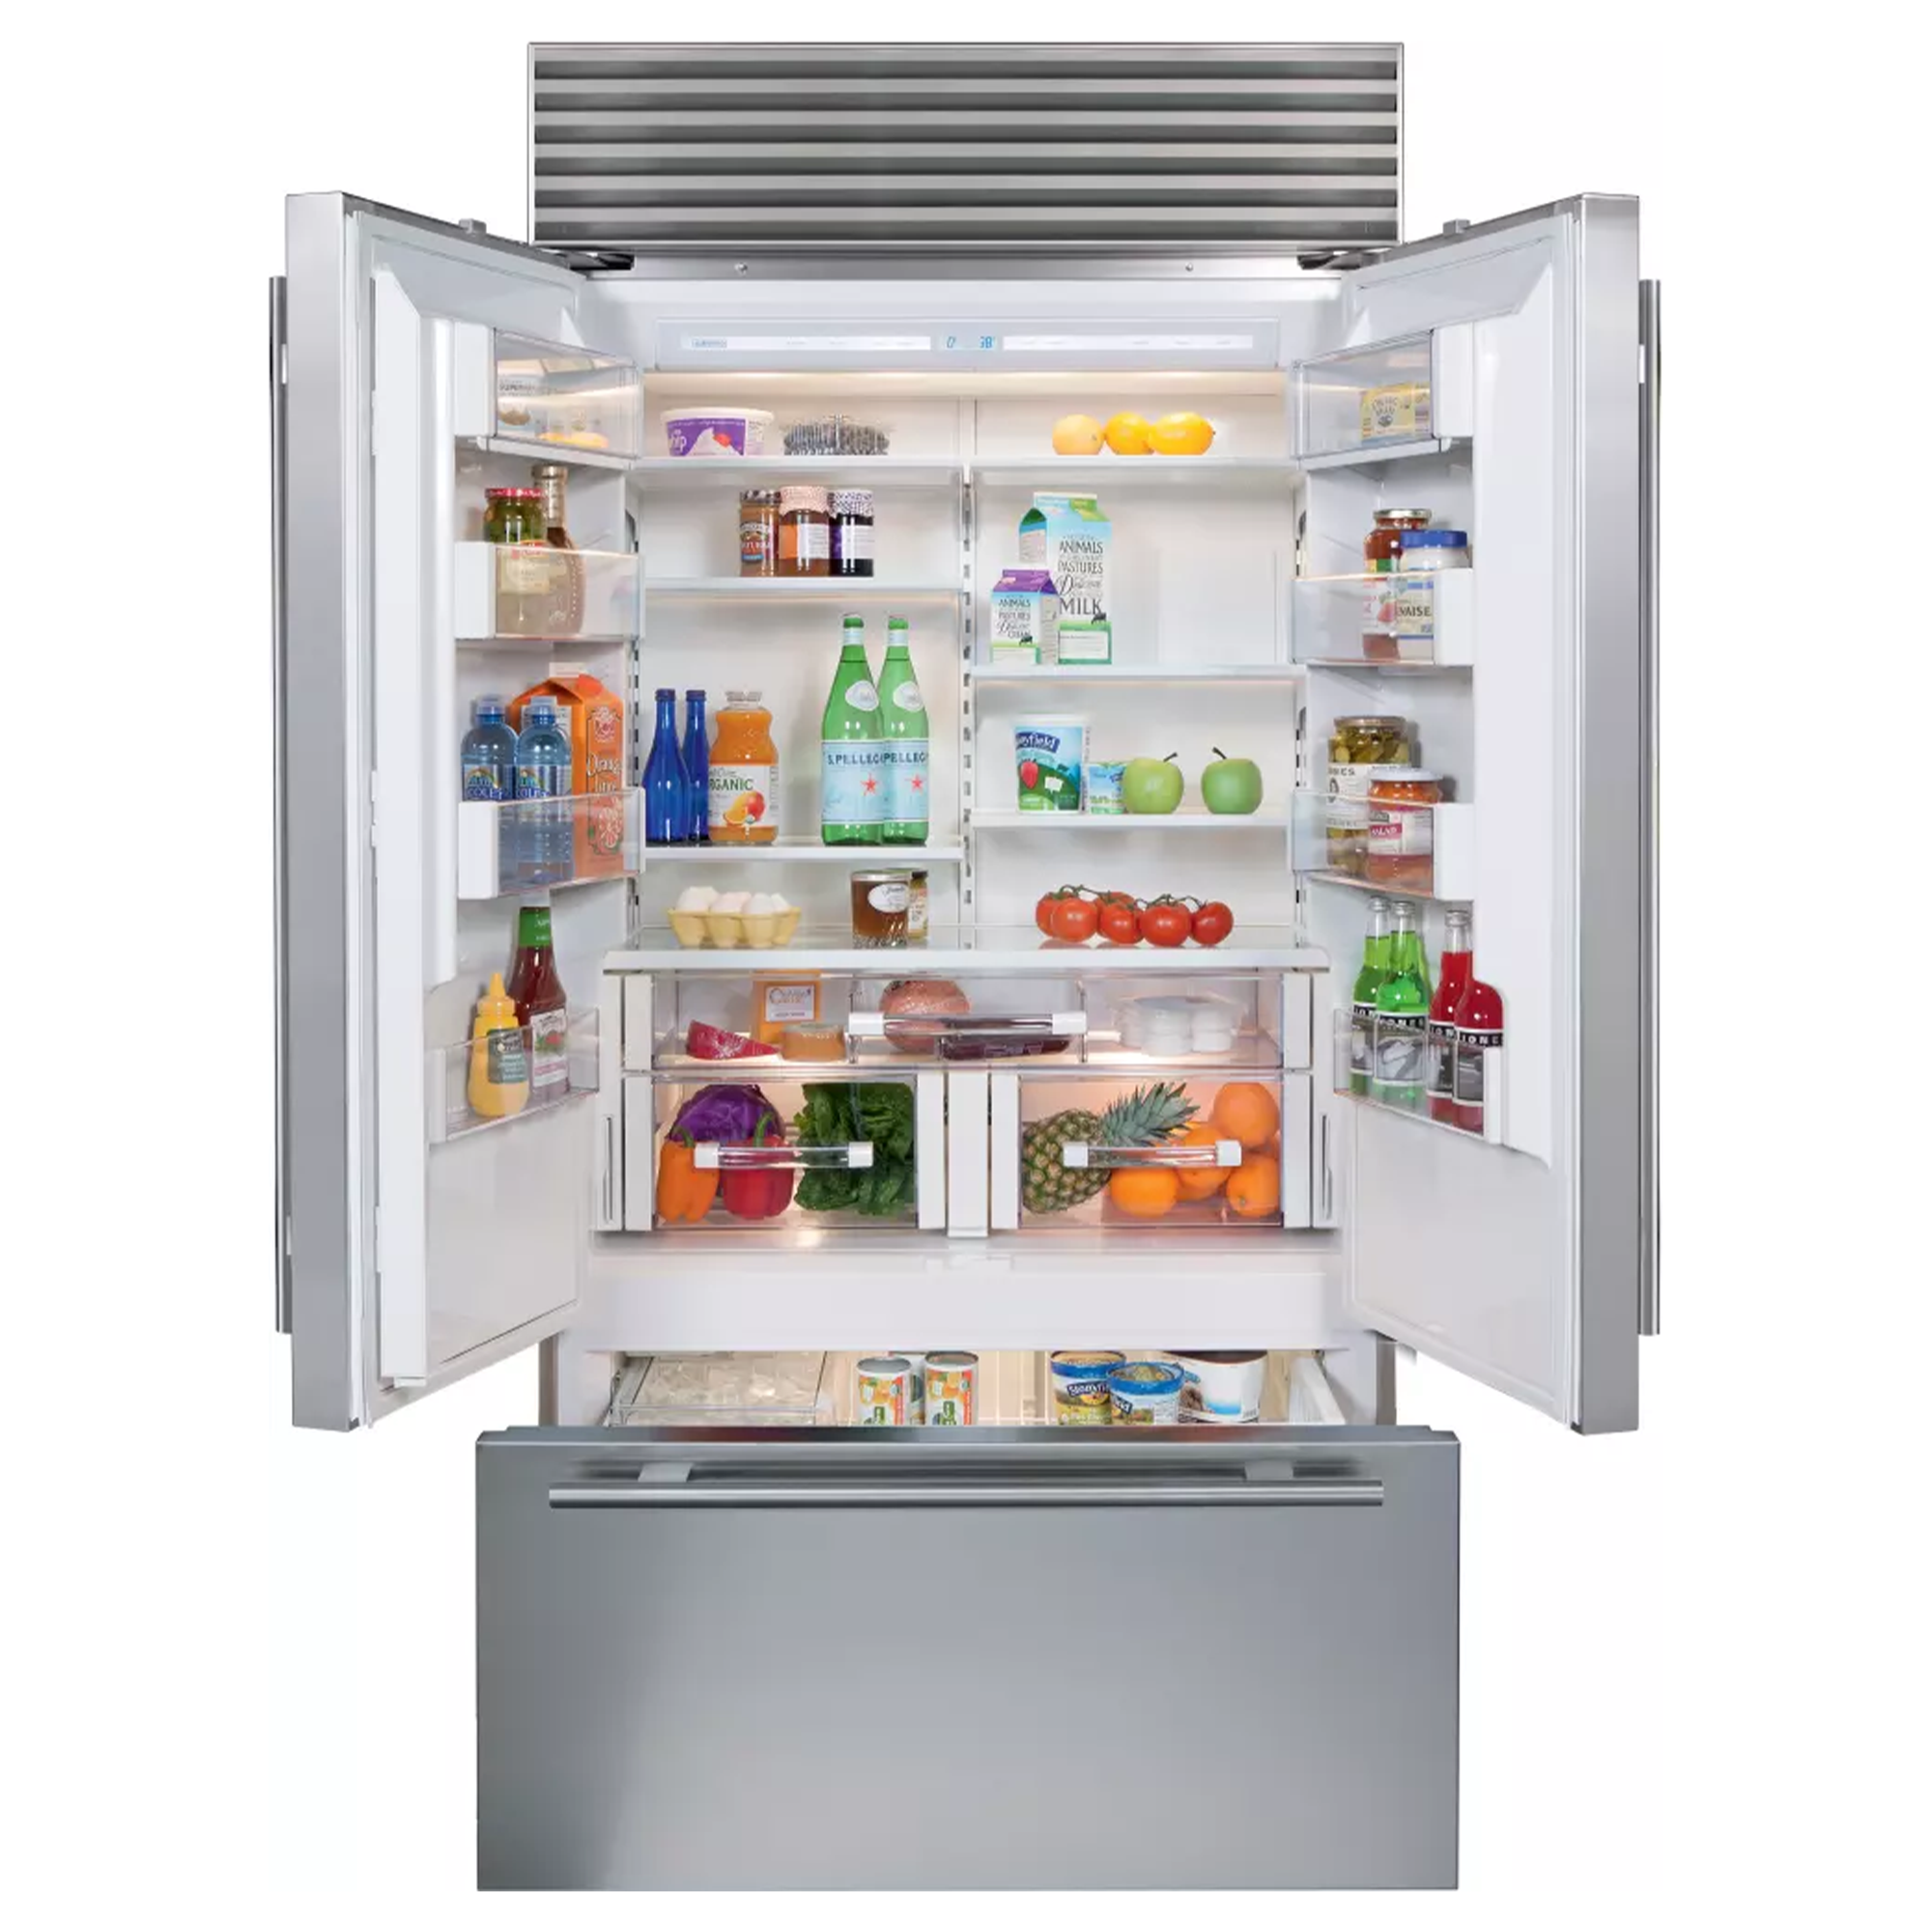 Refrigerator Freezer french door 42 inch inside